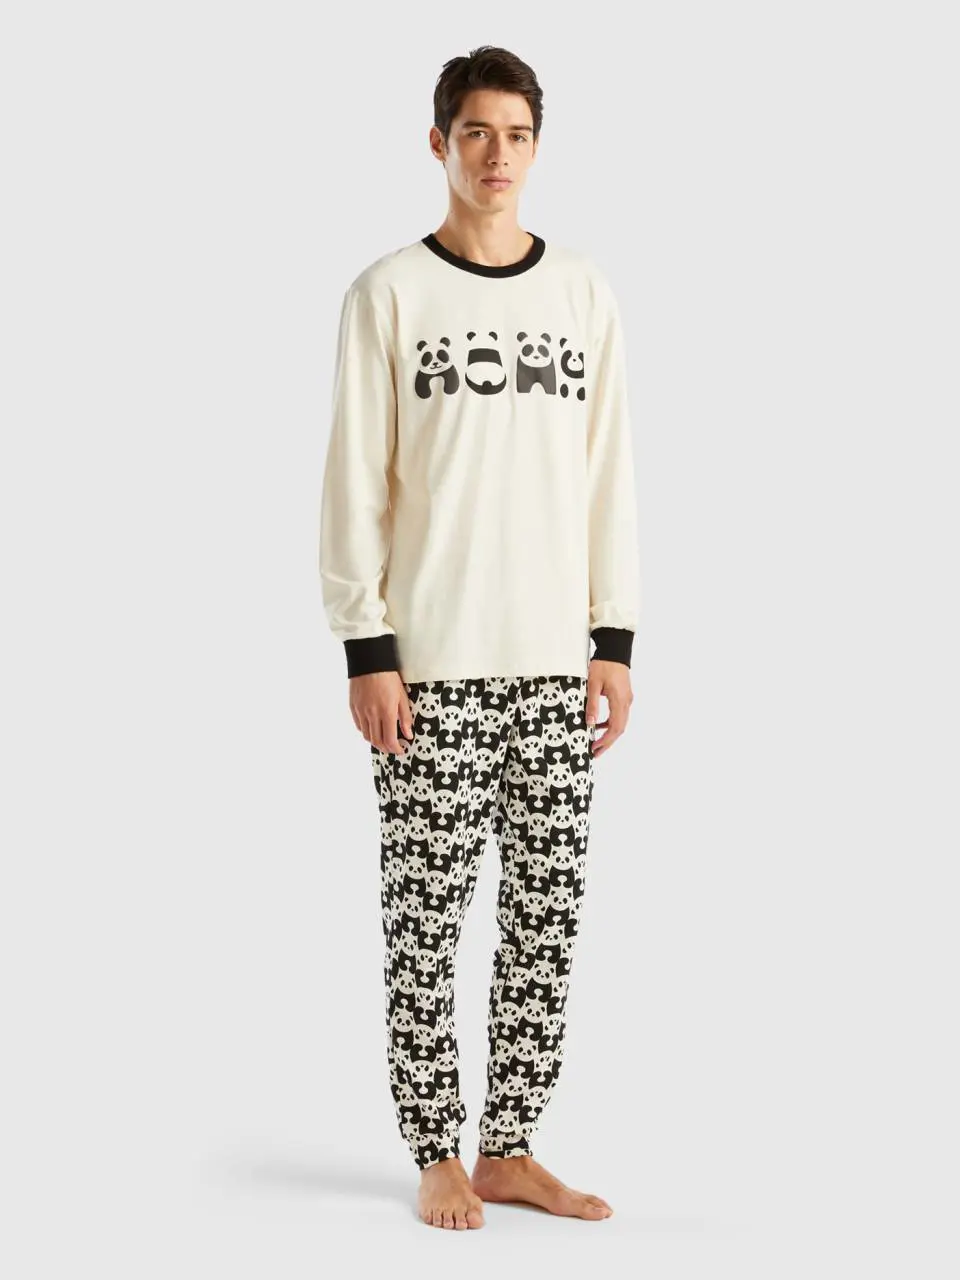 Benetton long pyjamas with panda print. 1